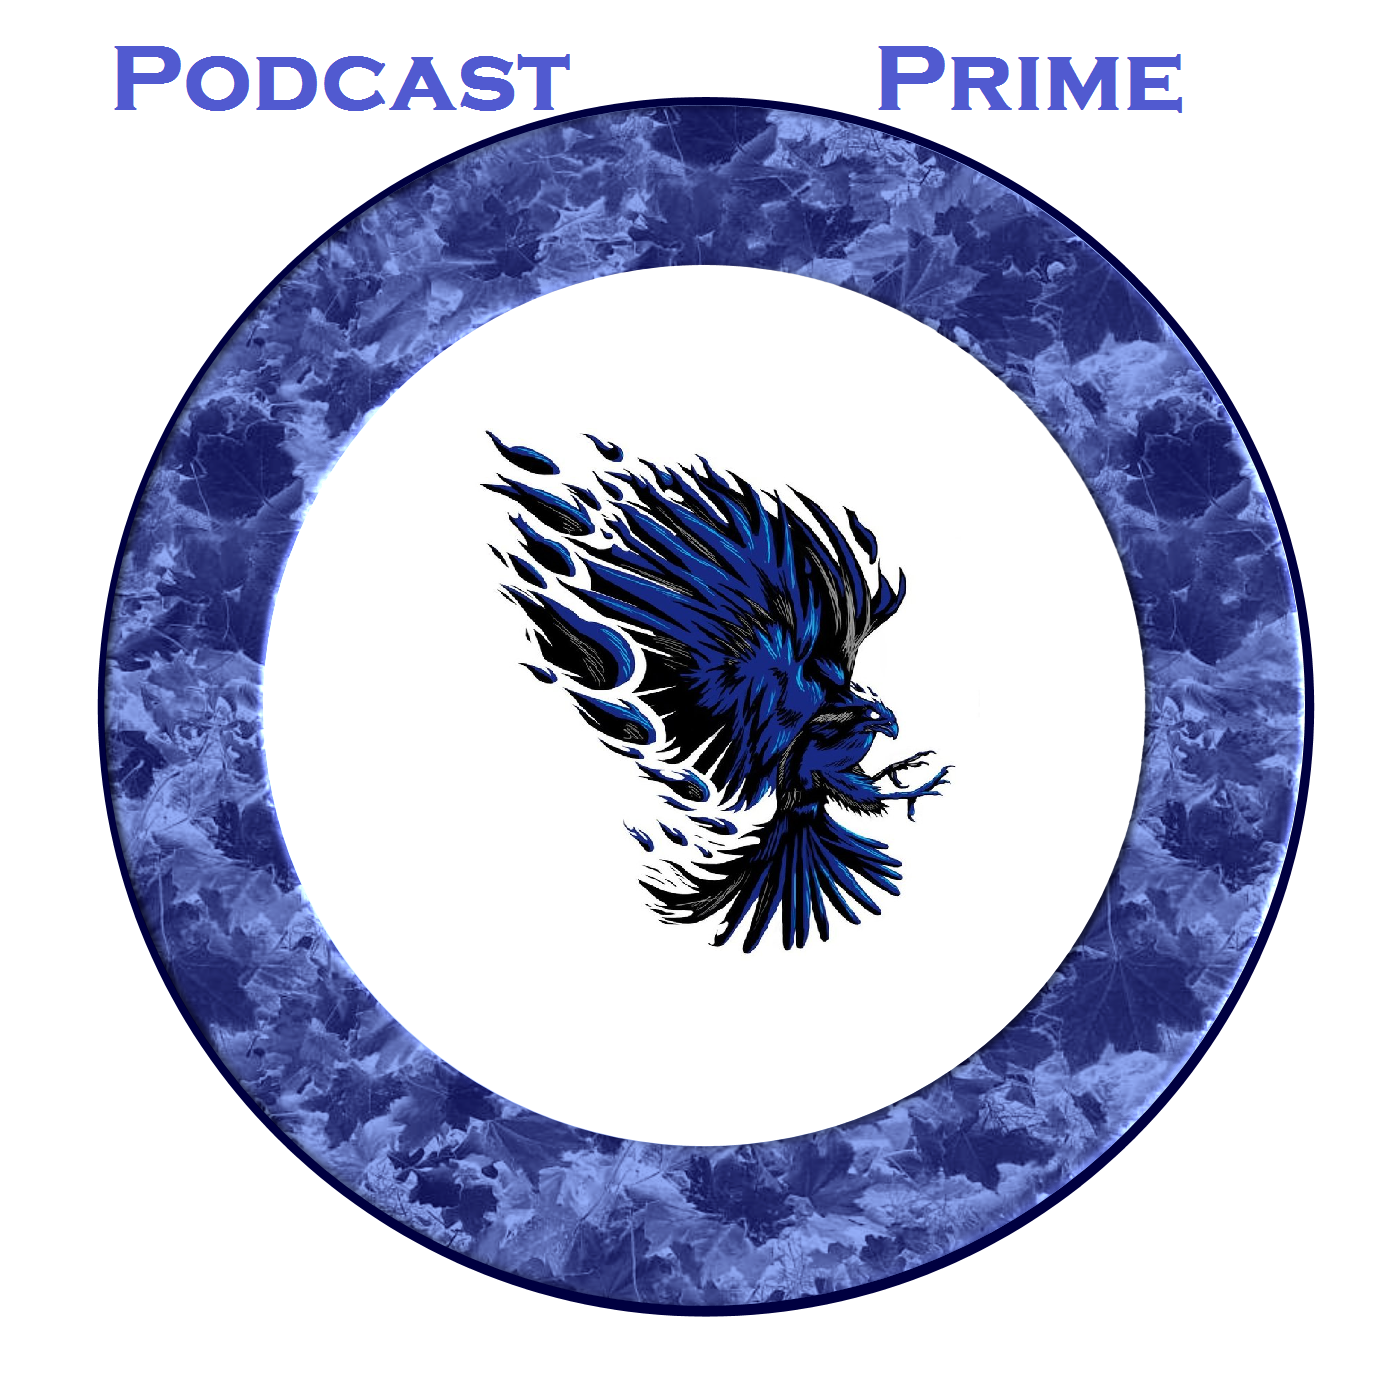 Podcast Prime: Episode 2